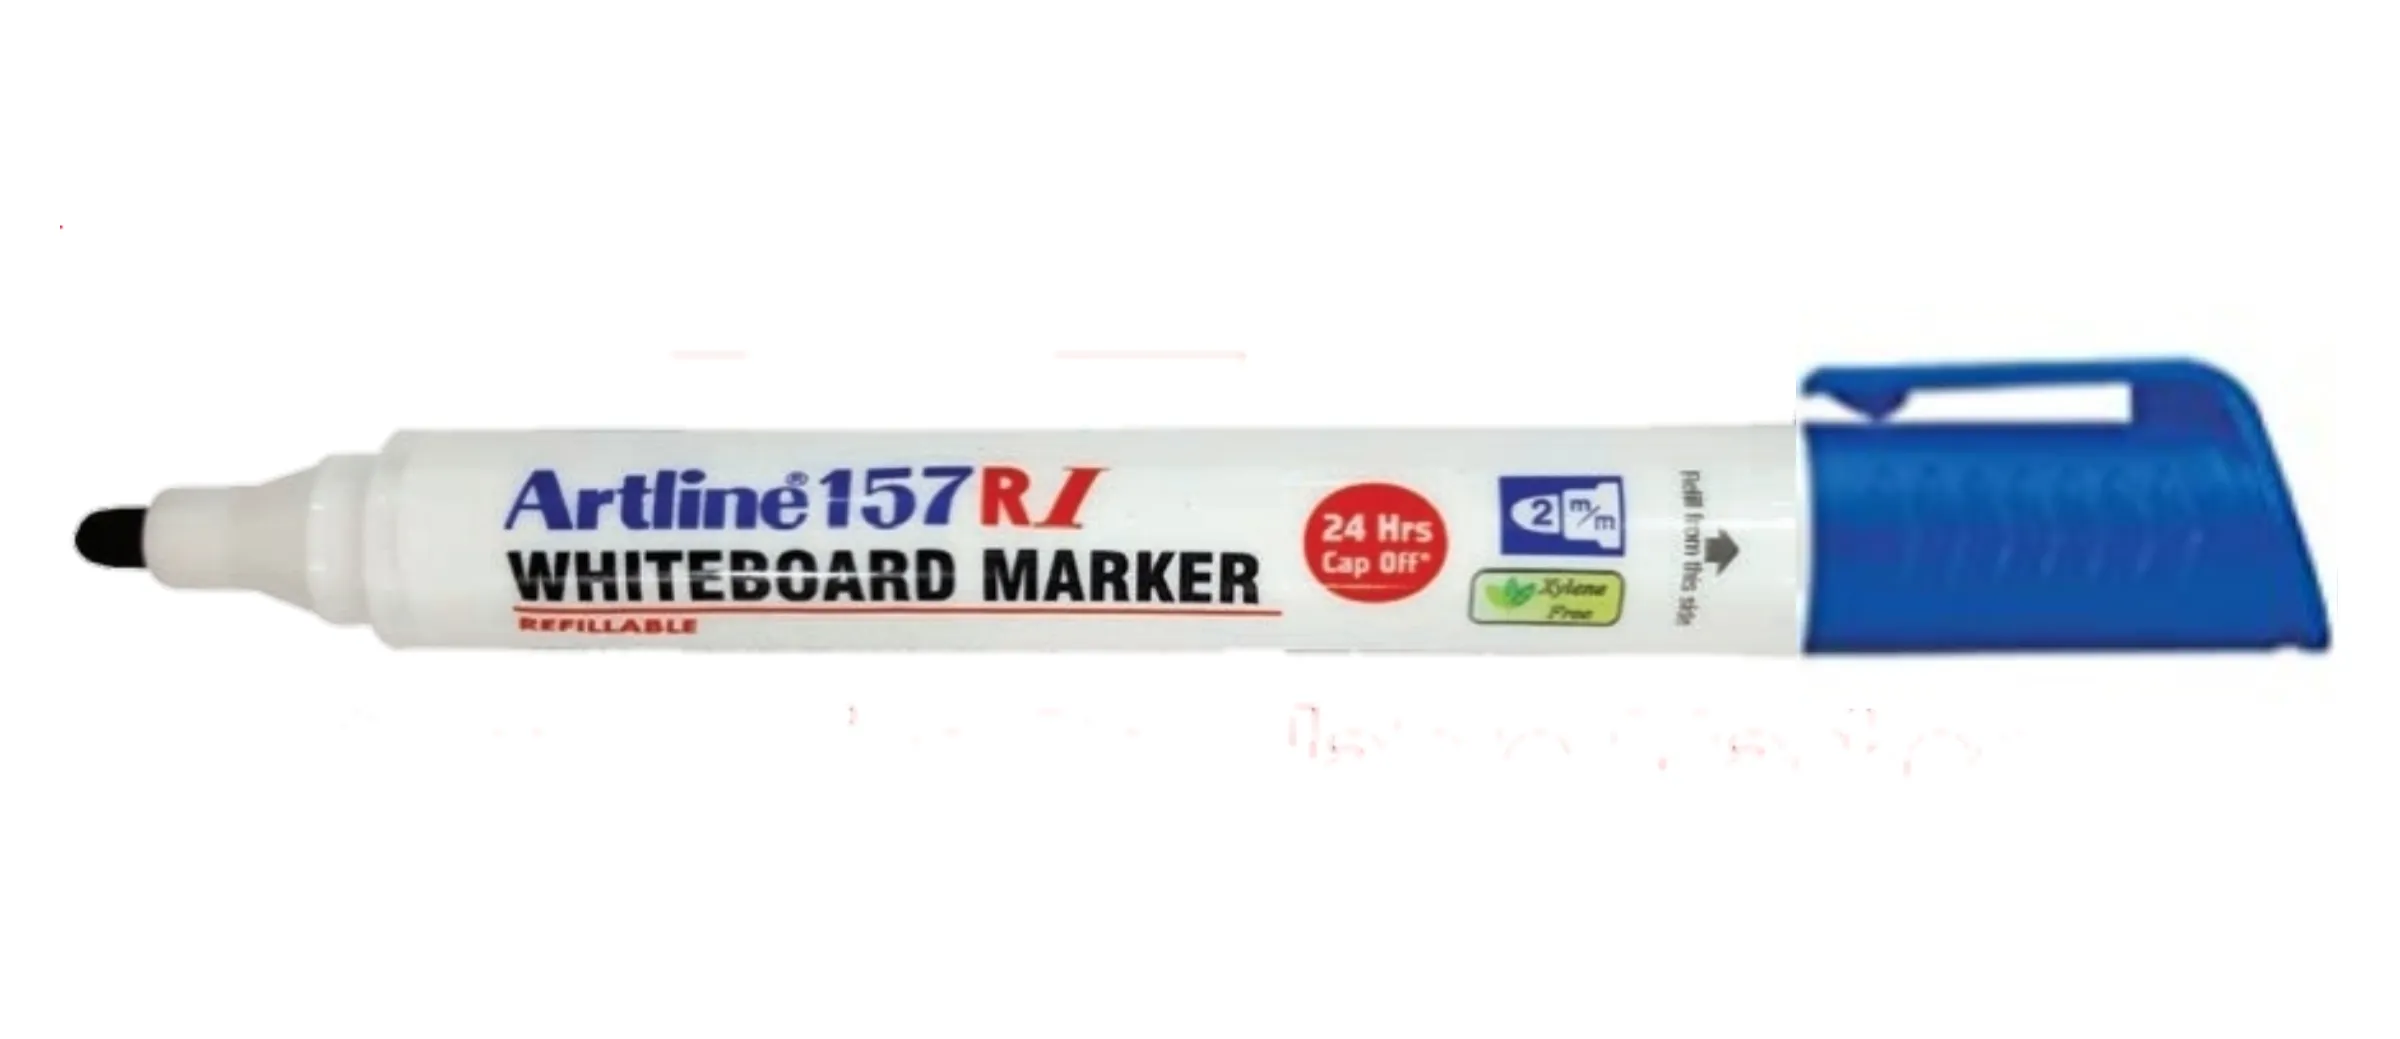 Artline White Board Marker 157 RI Refillable Blue Colour Pack of 5 Marker